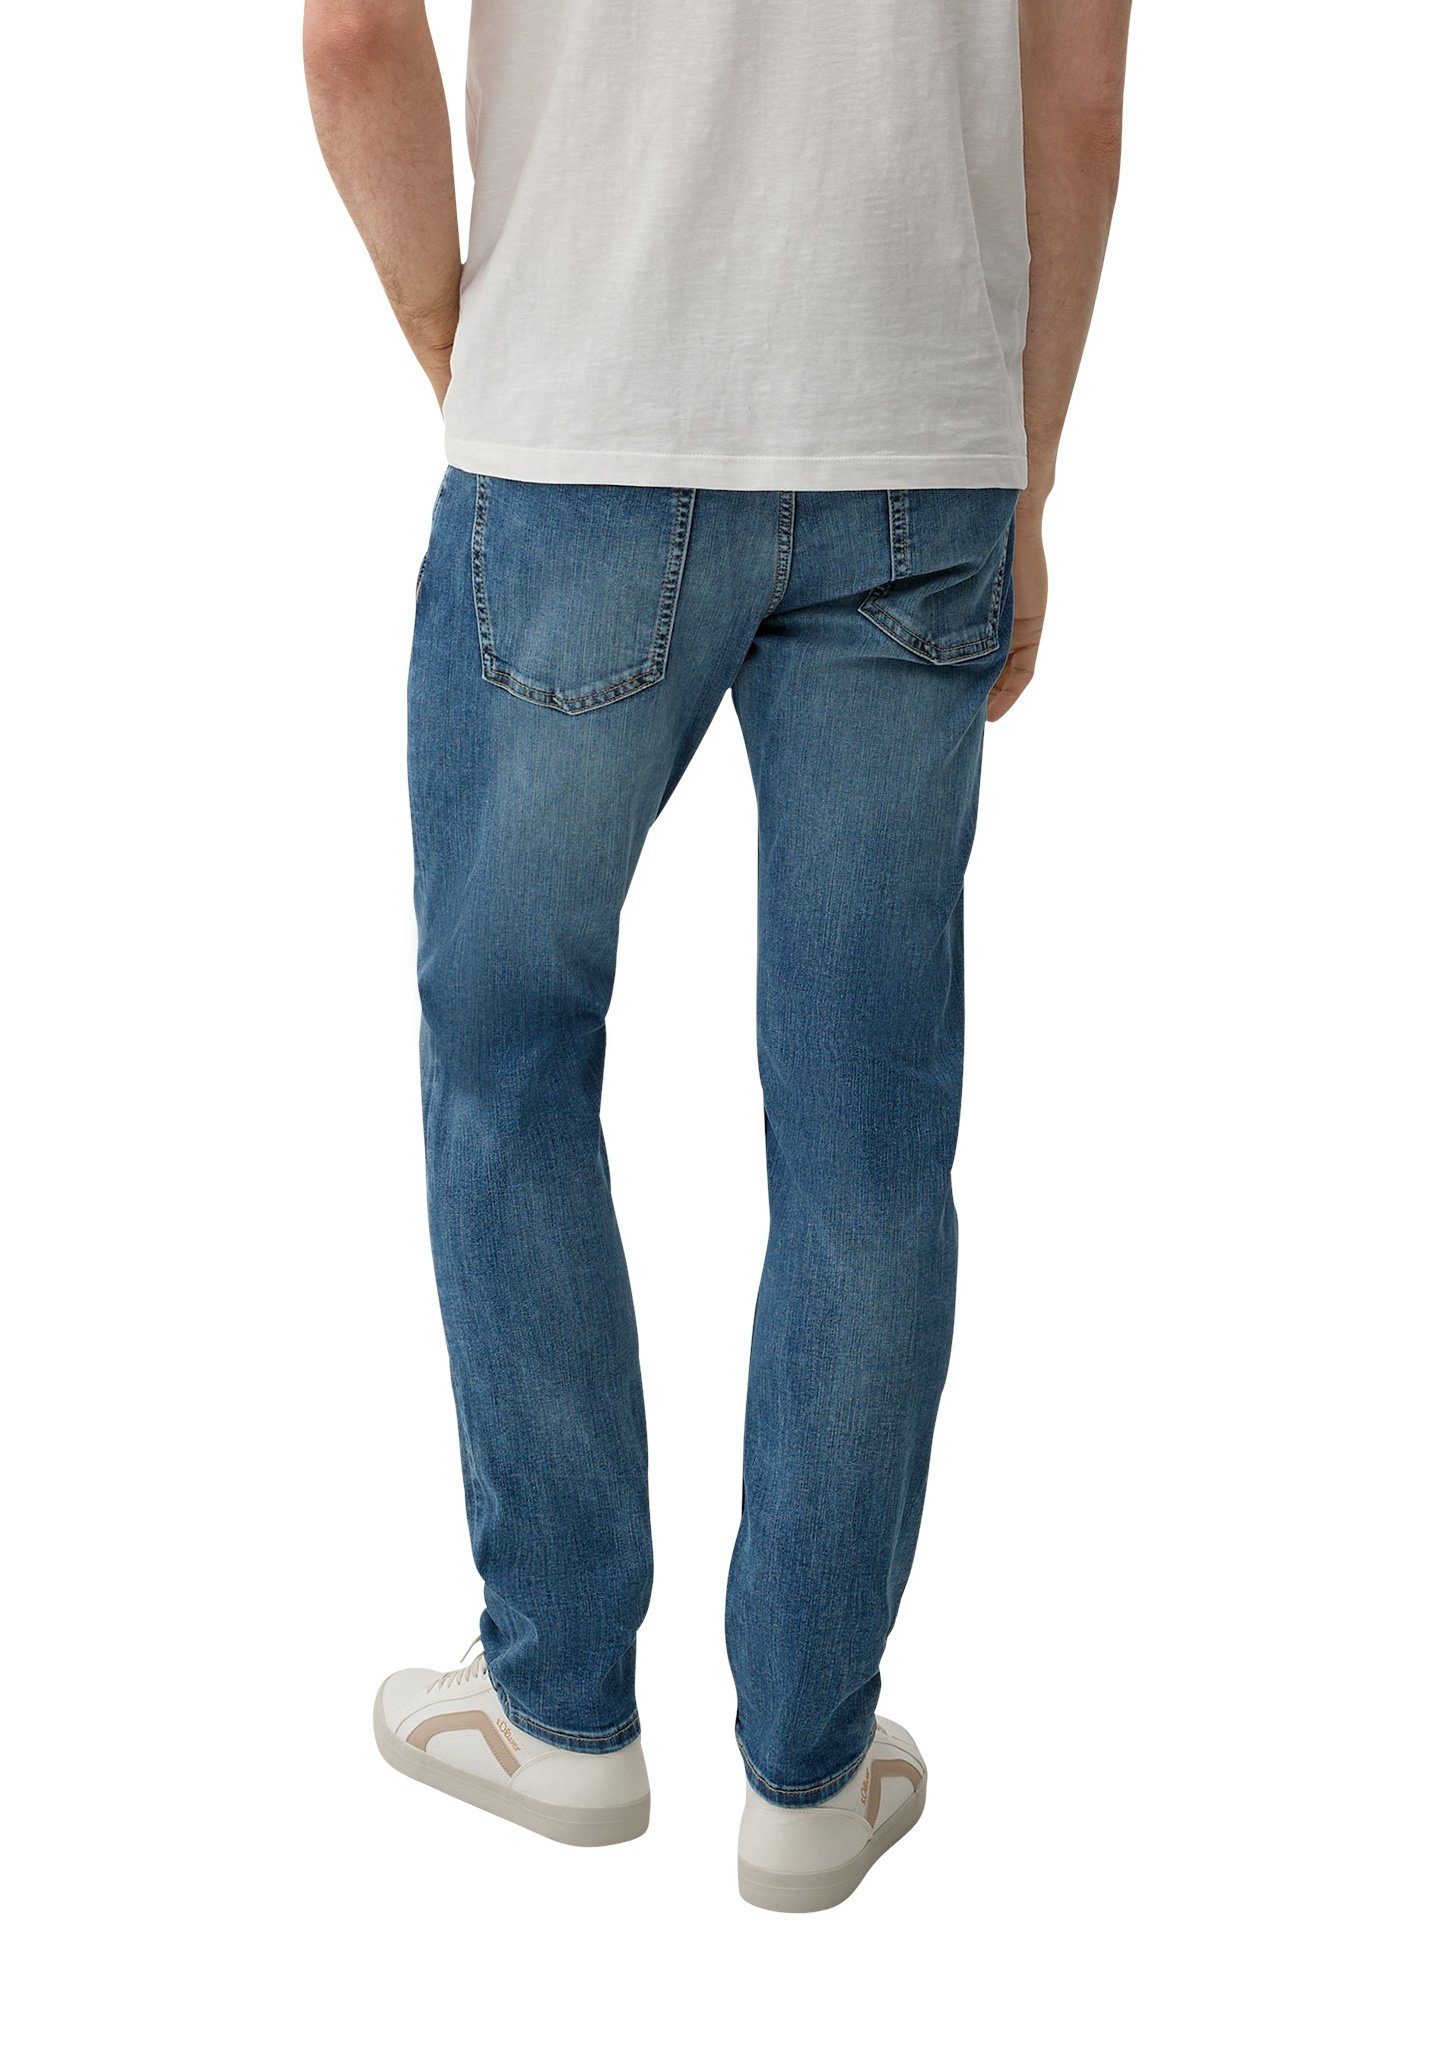 Keith BLUE Rise 53Z4 Jeans Slim / s.Oliver Slim-fit-Jeans Leg Slim-Fit Fit / Mid /